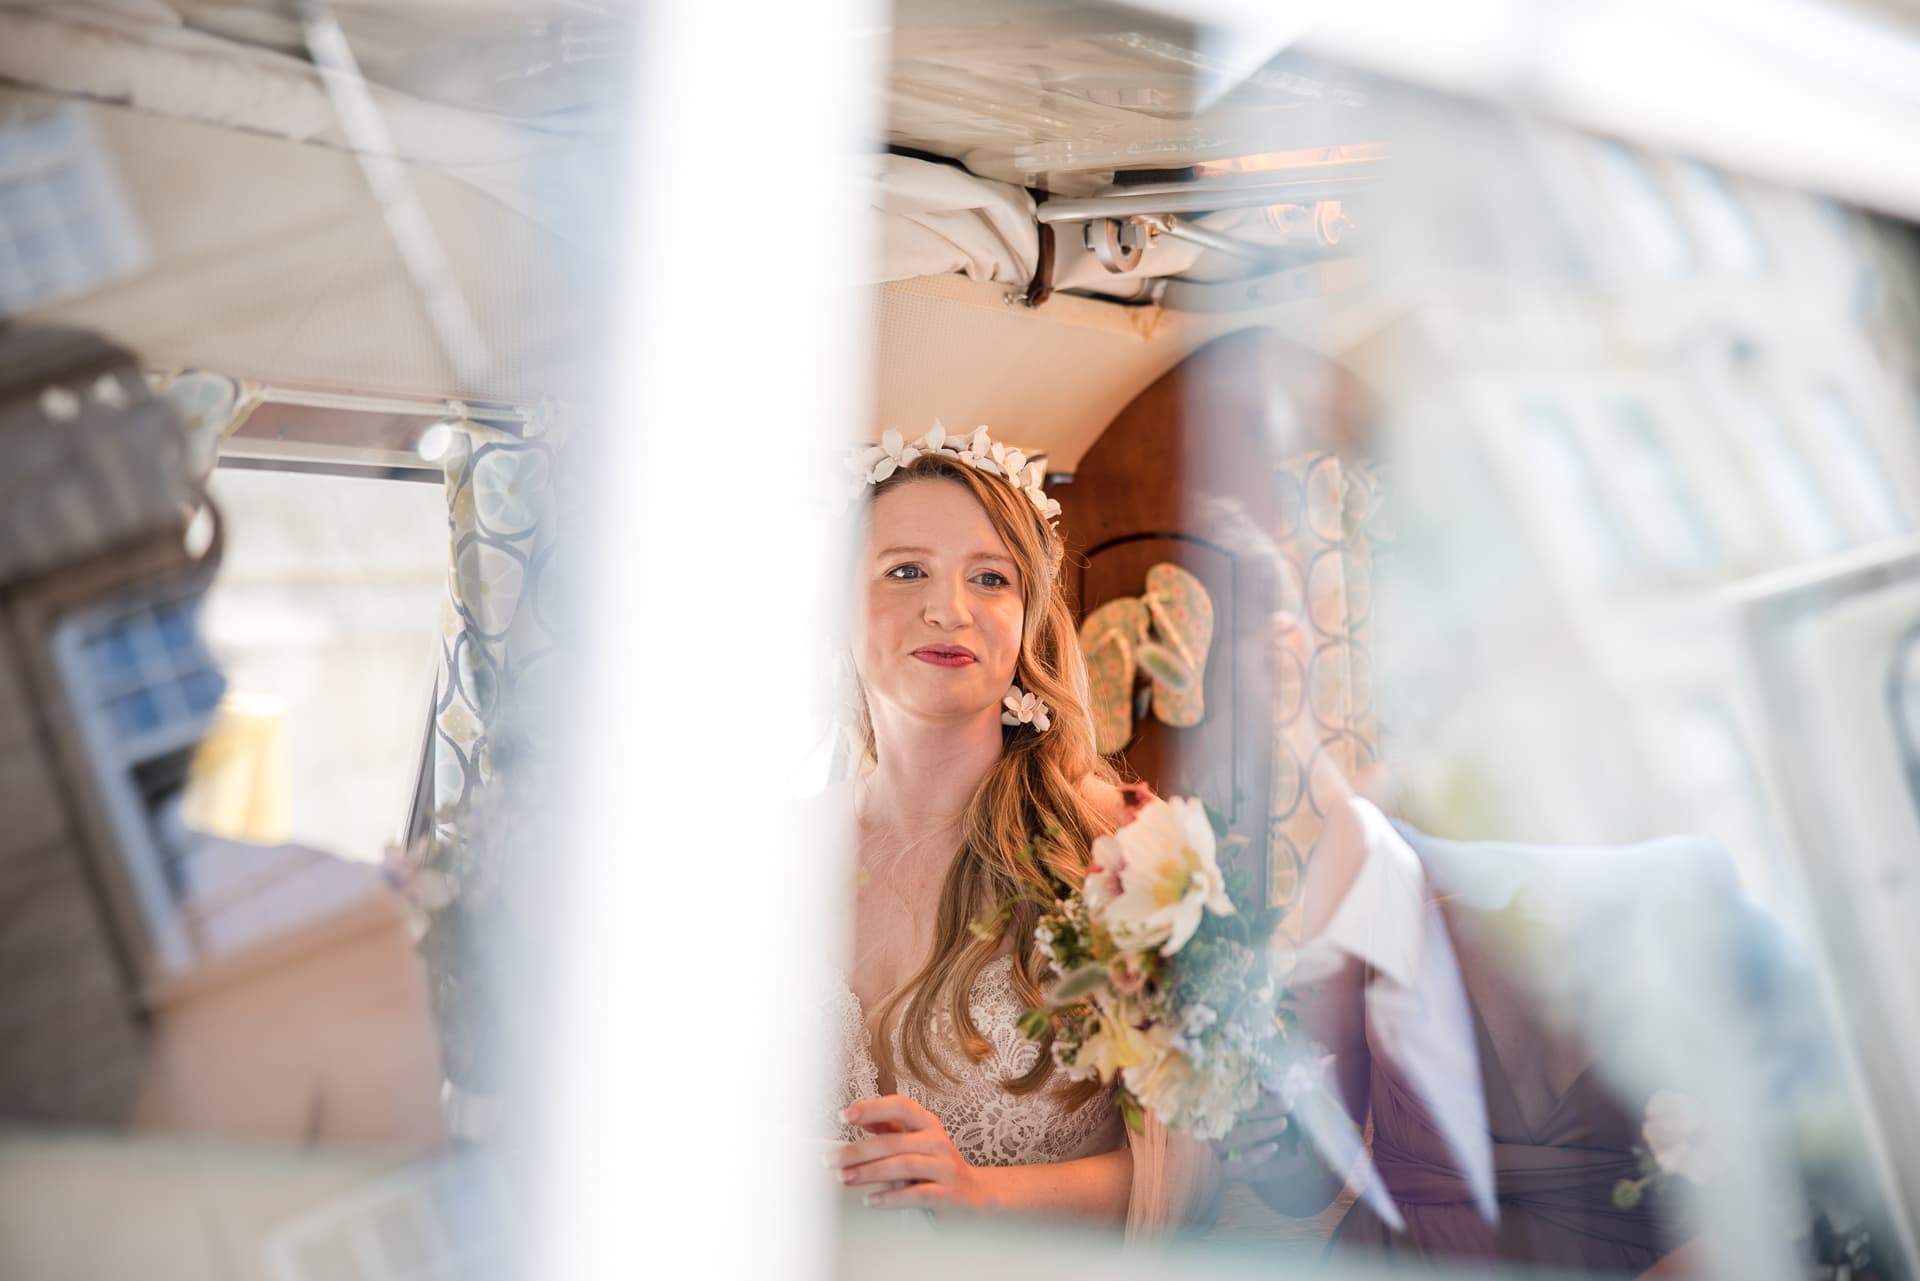 Bride looking out the door of a campervan